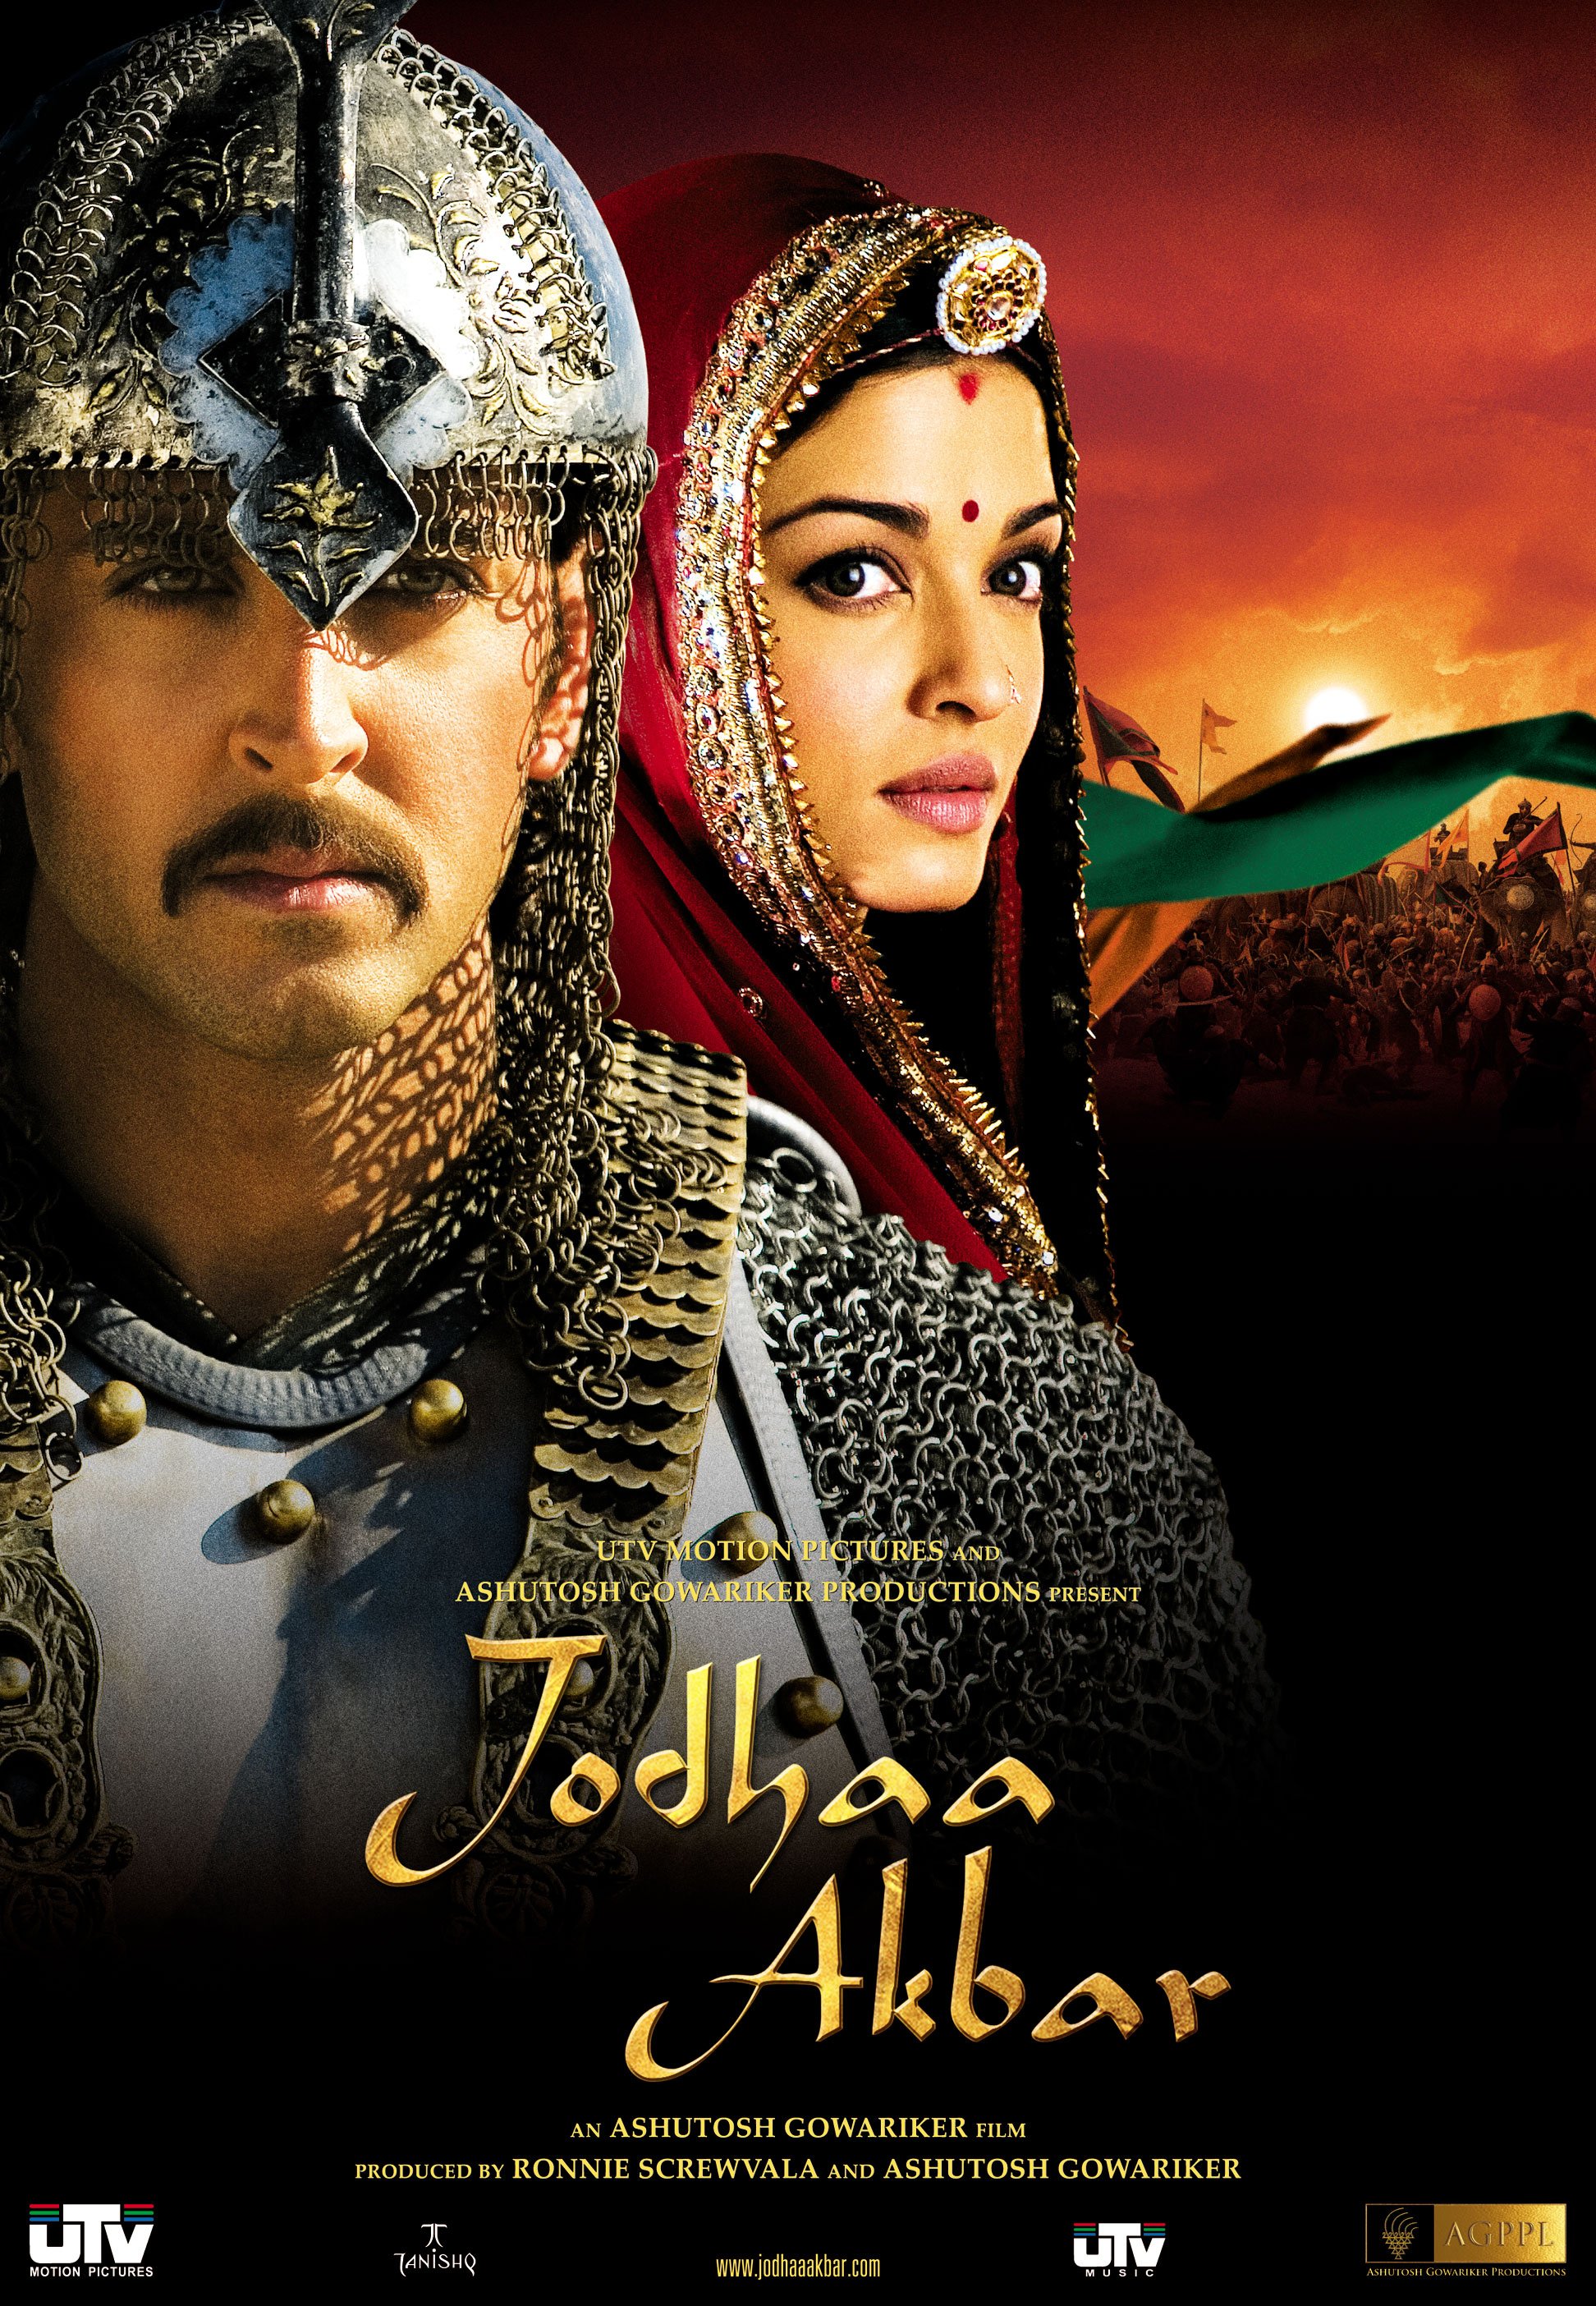 Jodha akbar full movie online watch in hindi